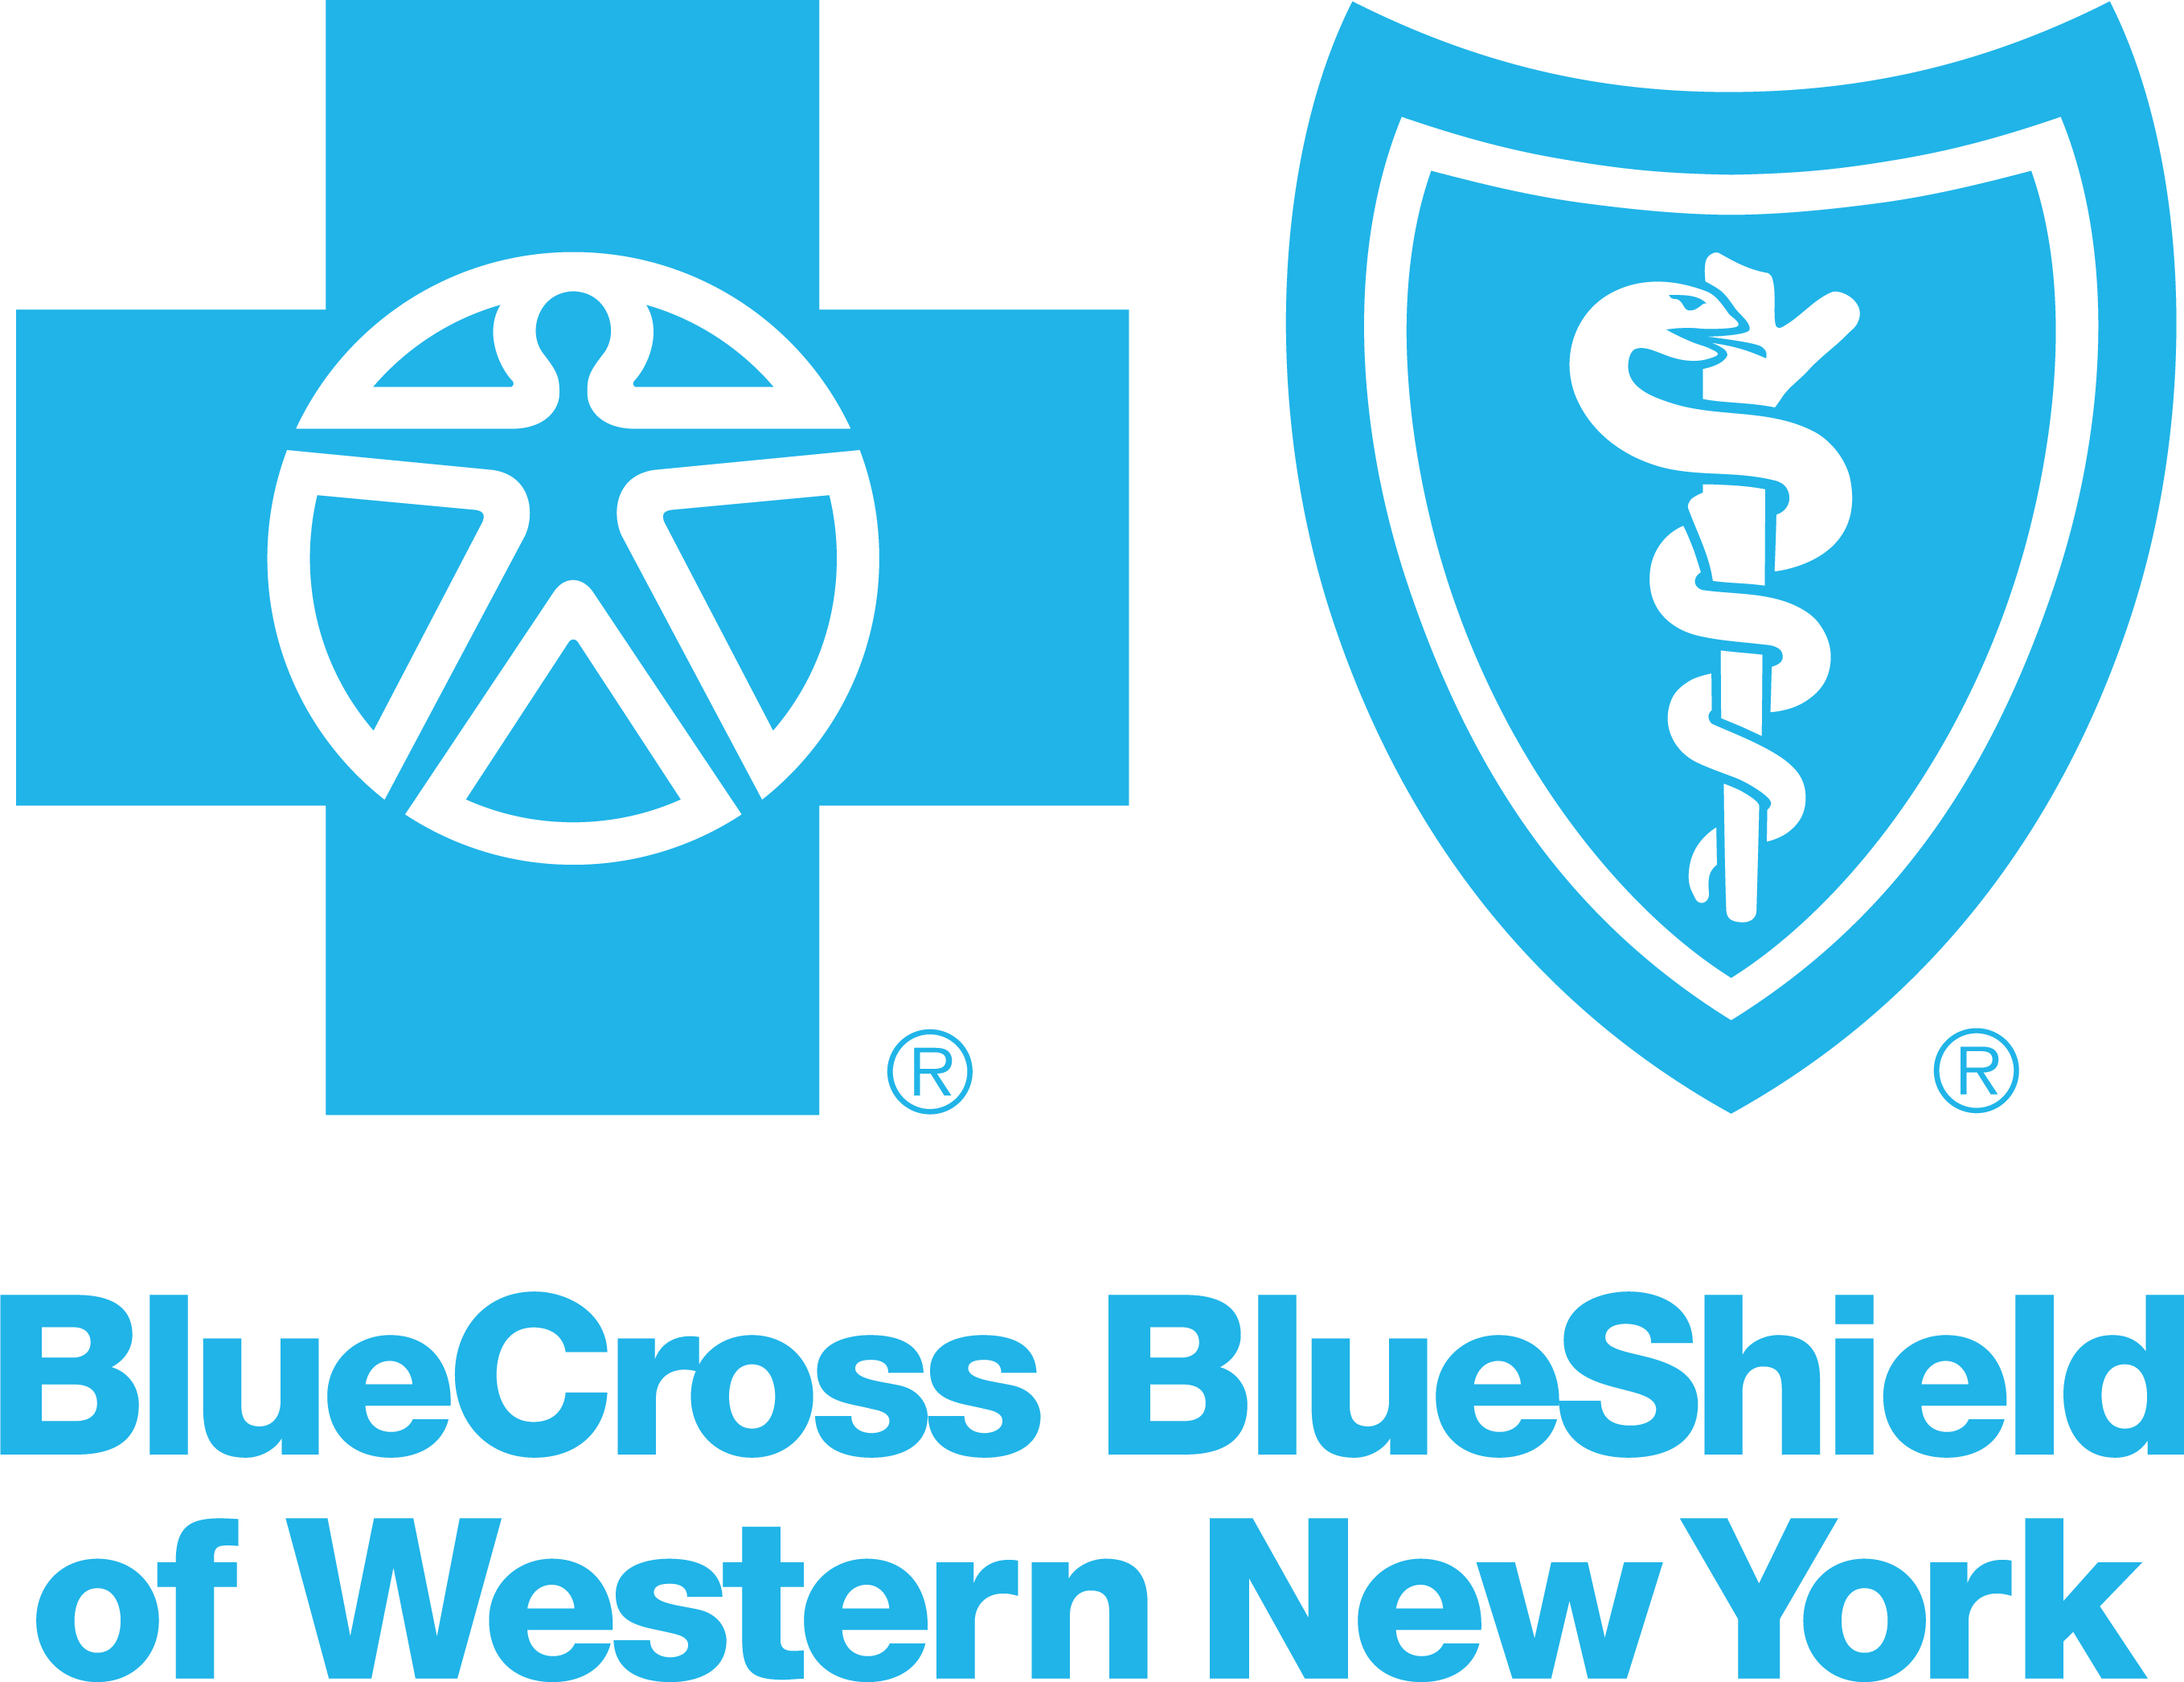 BlueCross BlueShield Offers 65+ Adults More Benefits